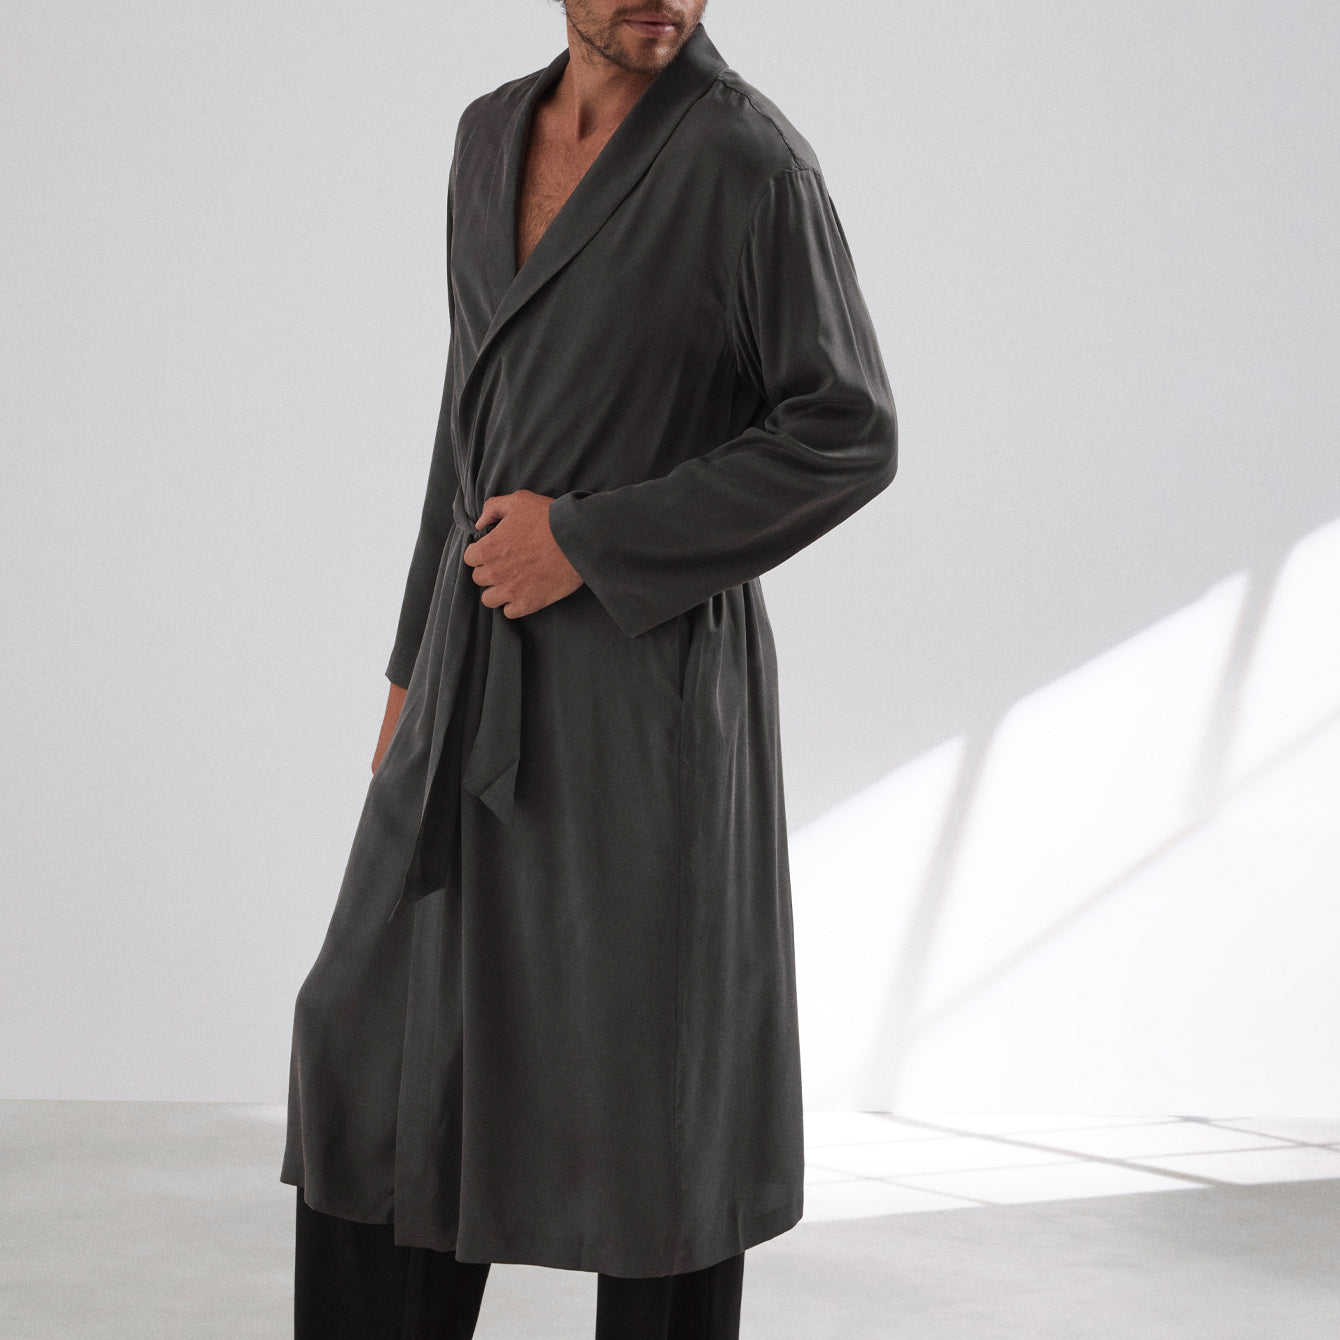 Men's Washable Silk Robe - #Meditative Grey